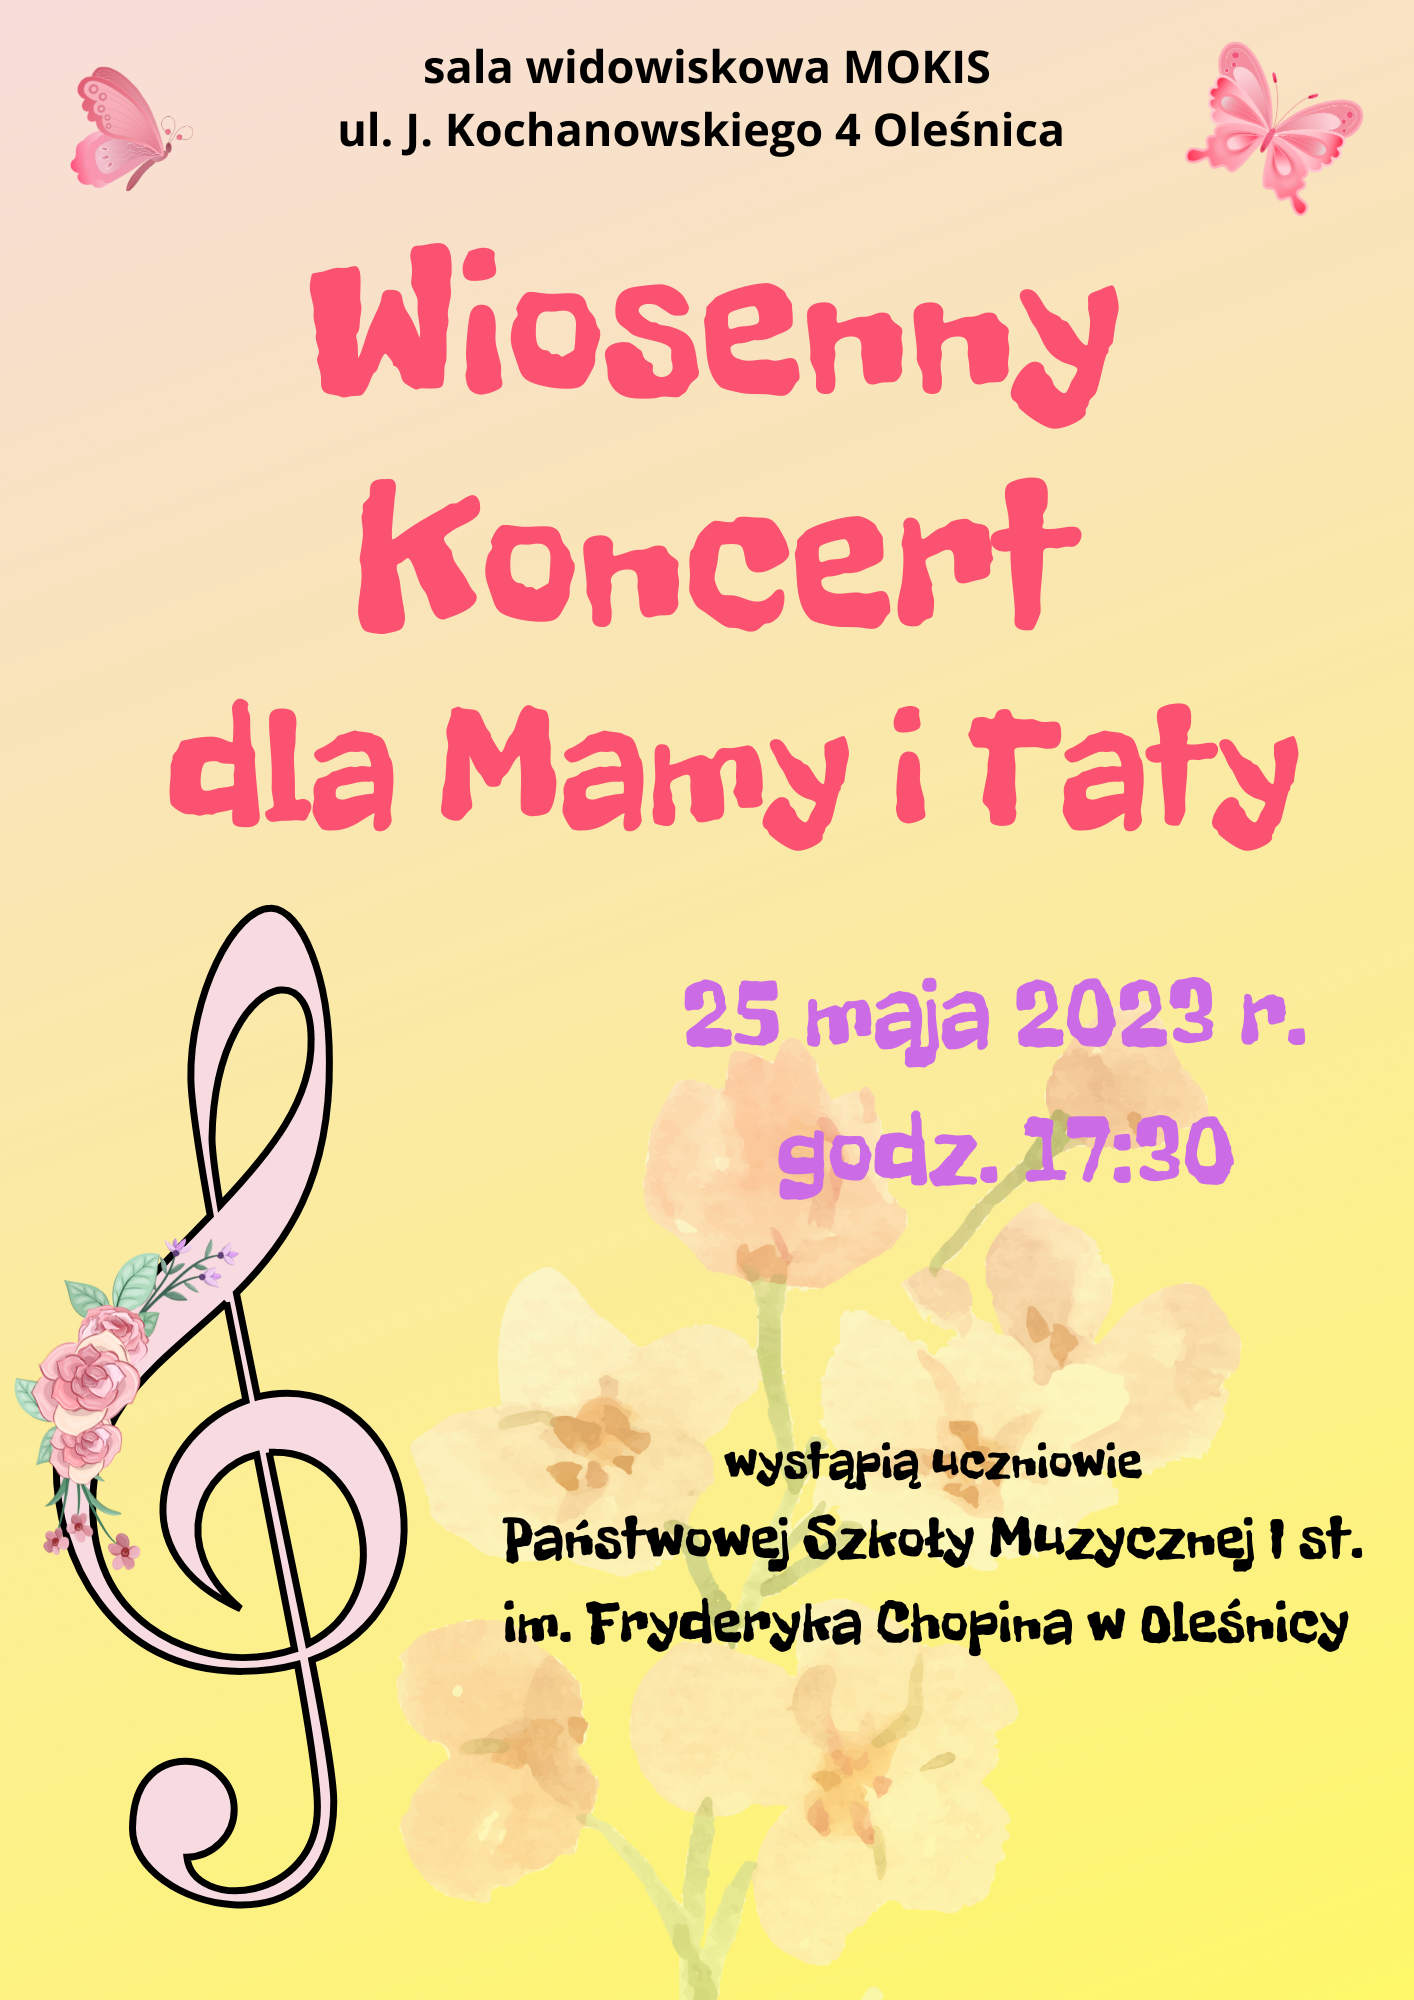 koncert wiosenny dla Mamy i Taty 25.05.2023 r.